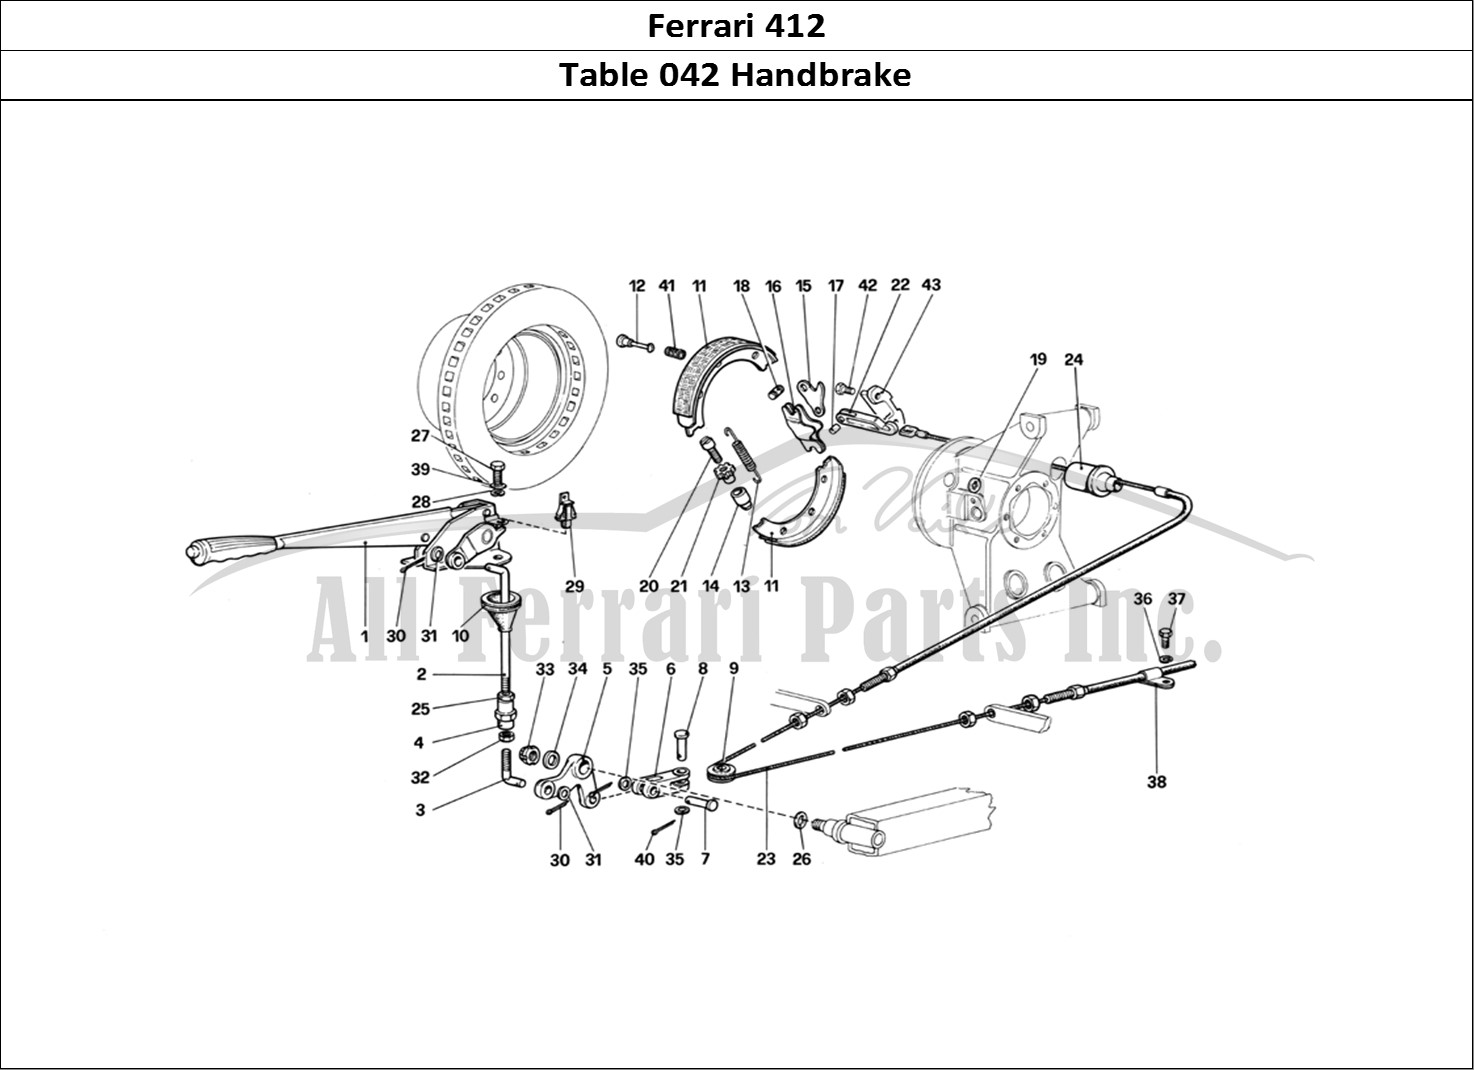 Ferrari Parts Ferrari 412 (Mechanical) Page 042 Hand - Brake Control